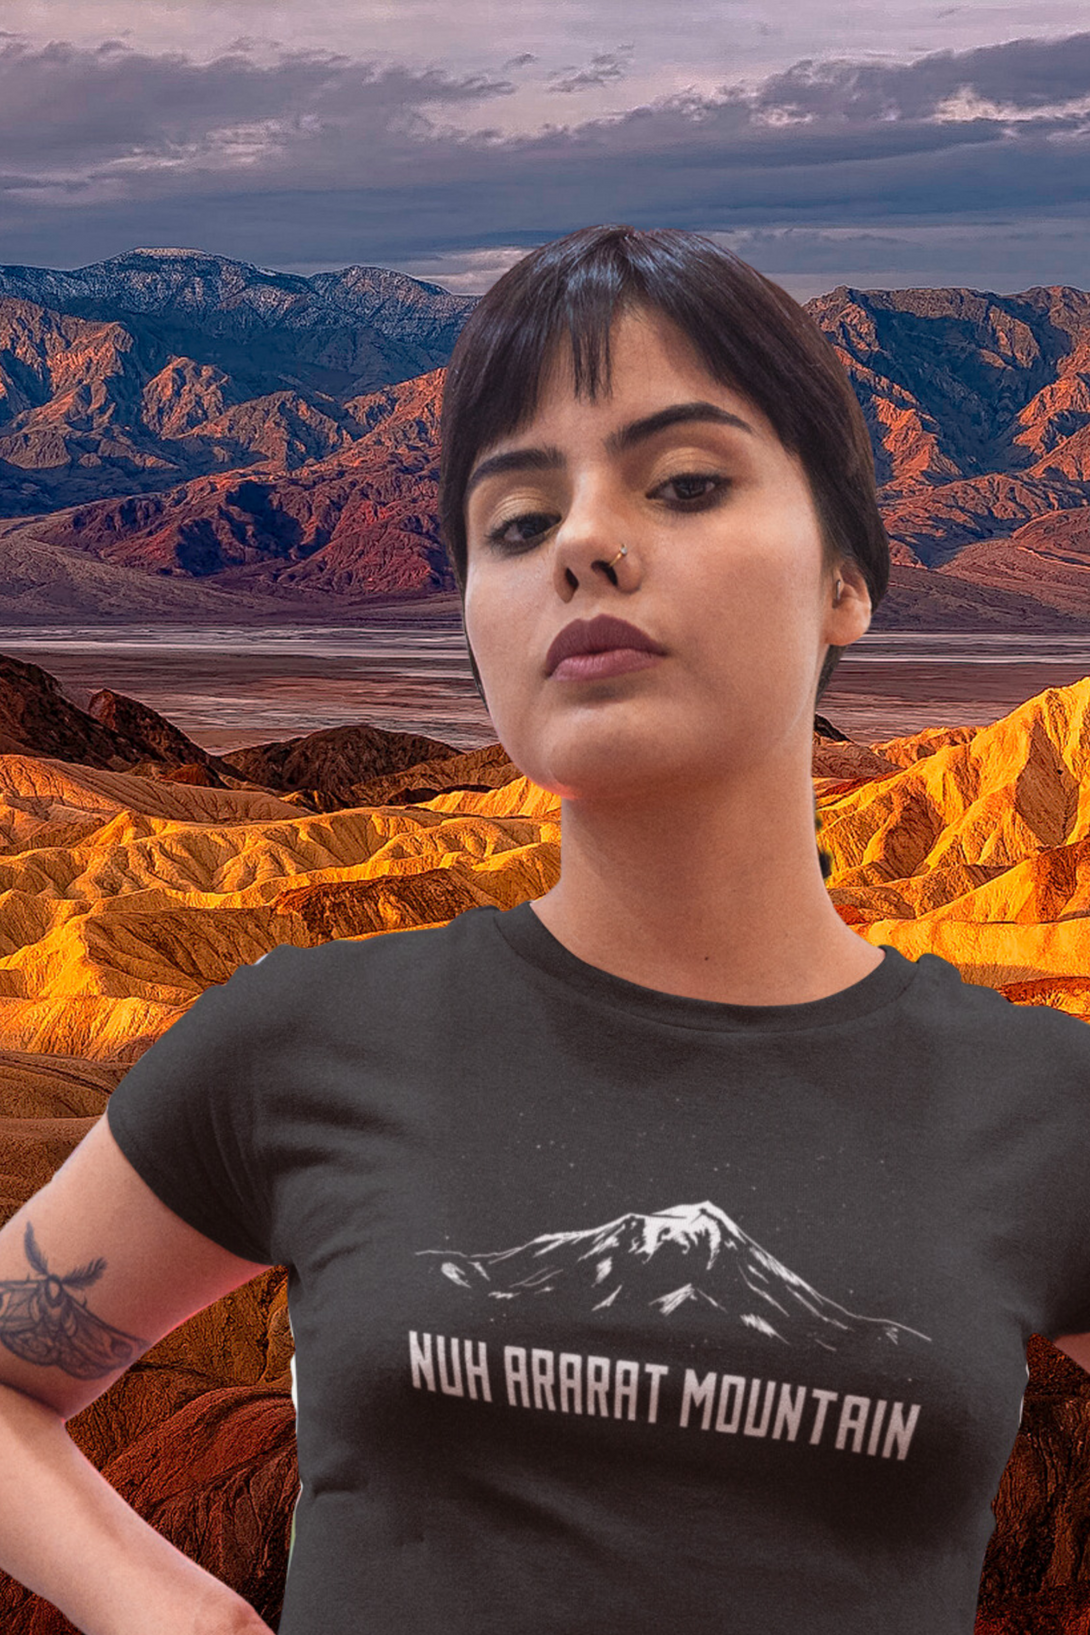 Nuh Ararat Mountain Printed T-Shirt For Women - WowWaves - 6